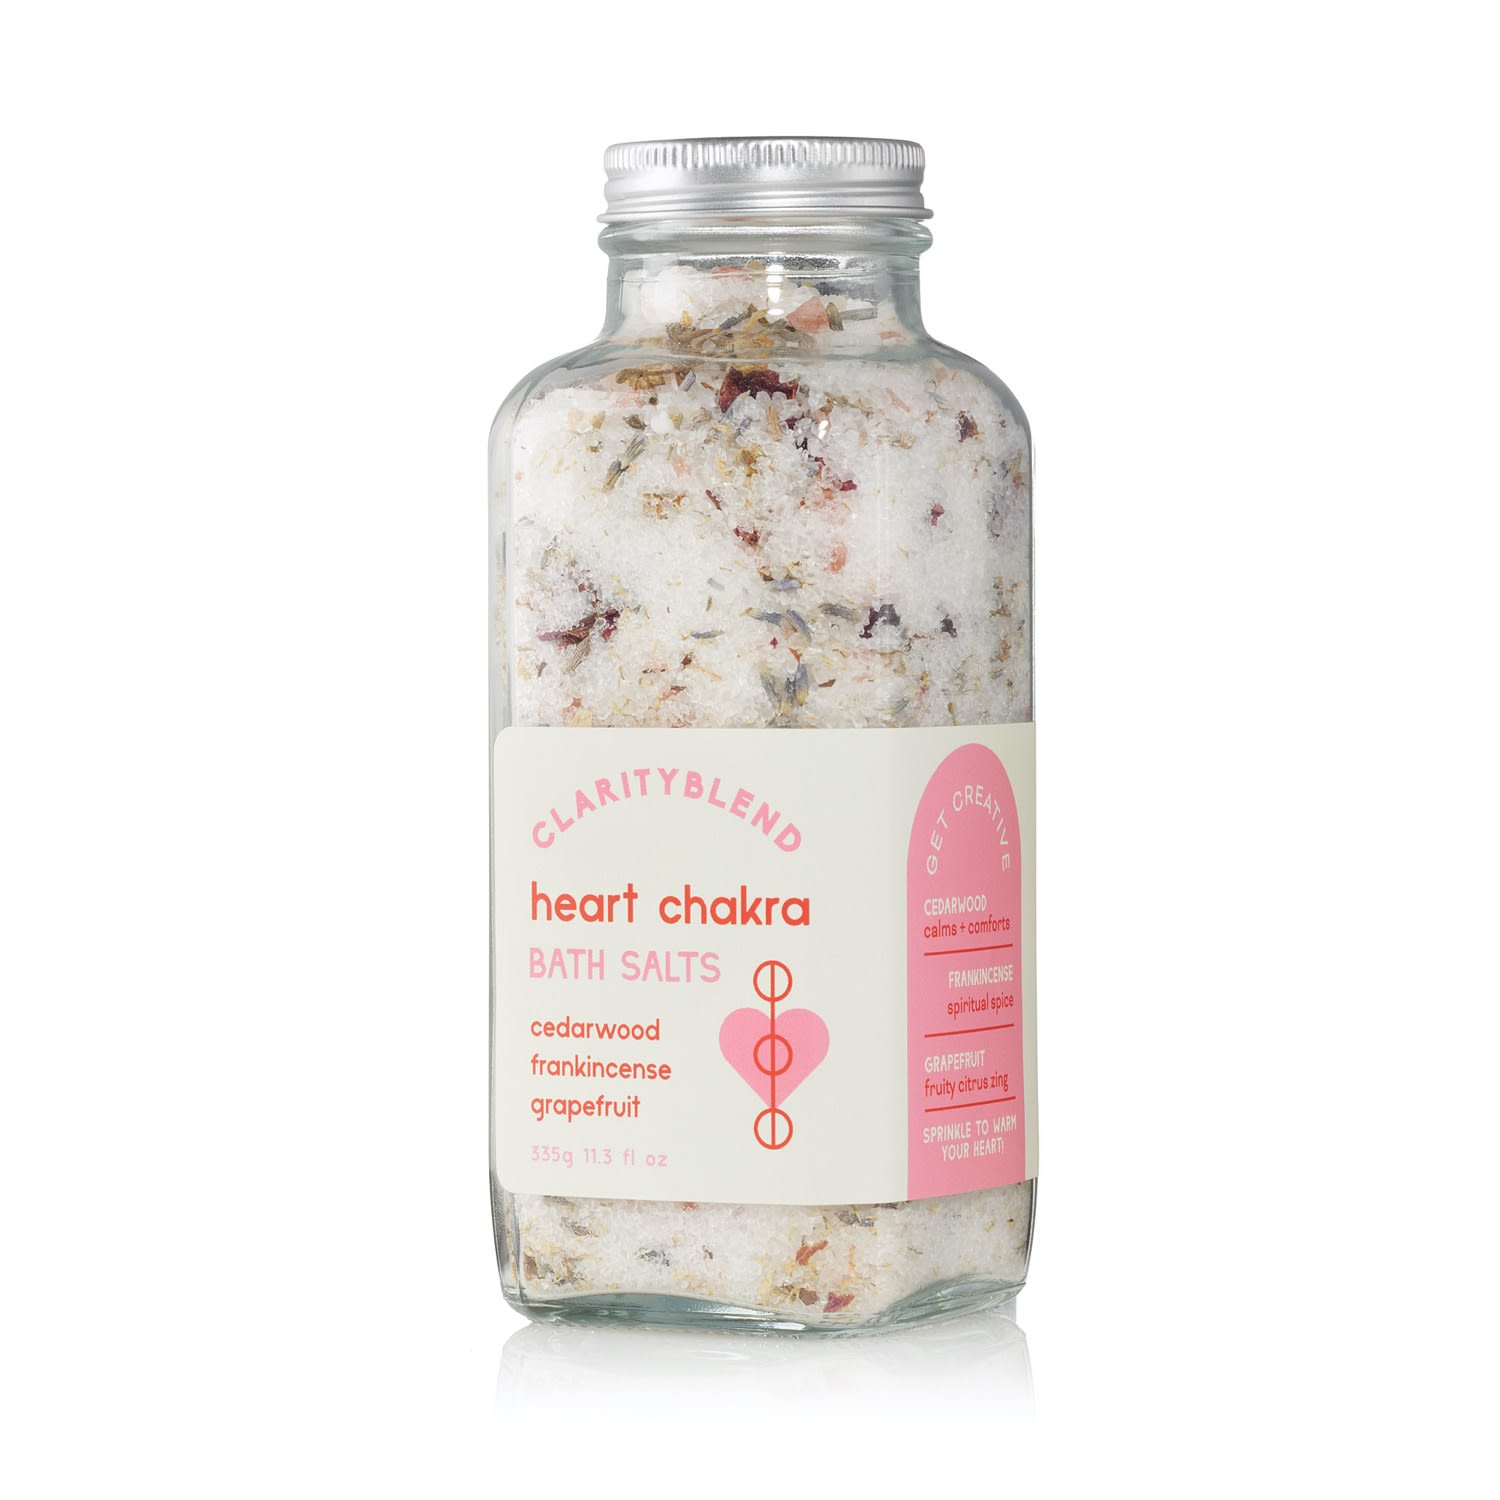 Heart Chakra Bath Salts Clarity Blend Aromatherapy